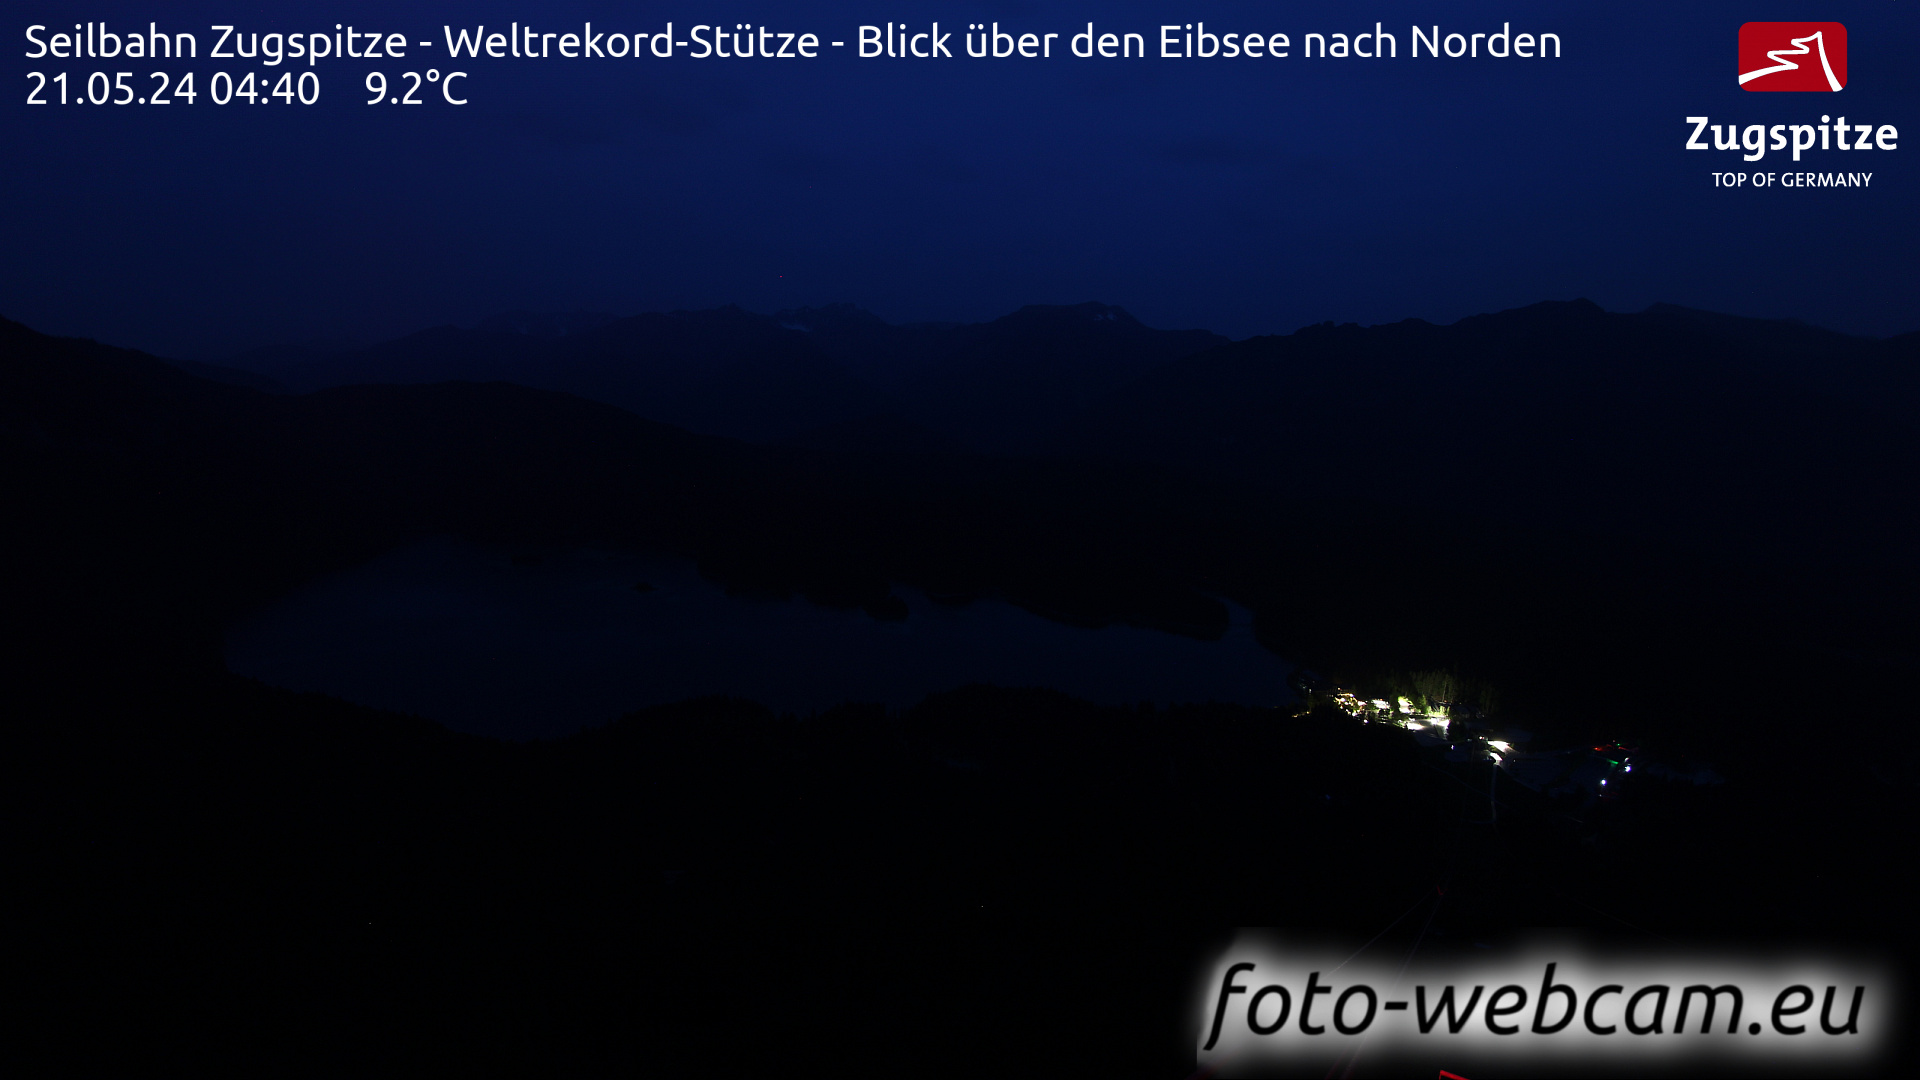 Zugspitze Mo. 04:49